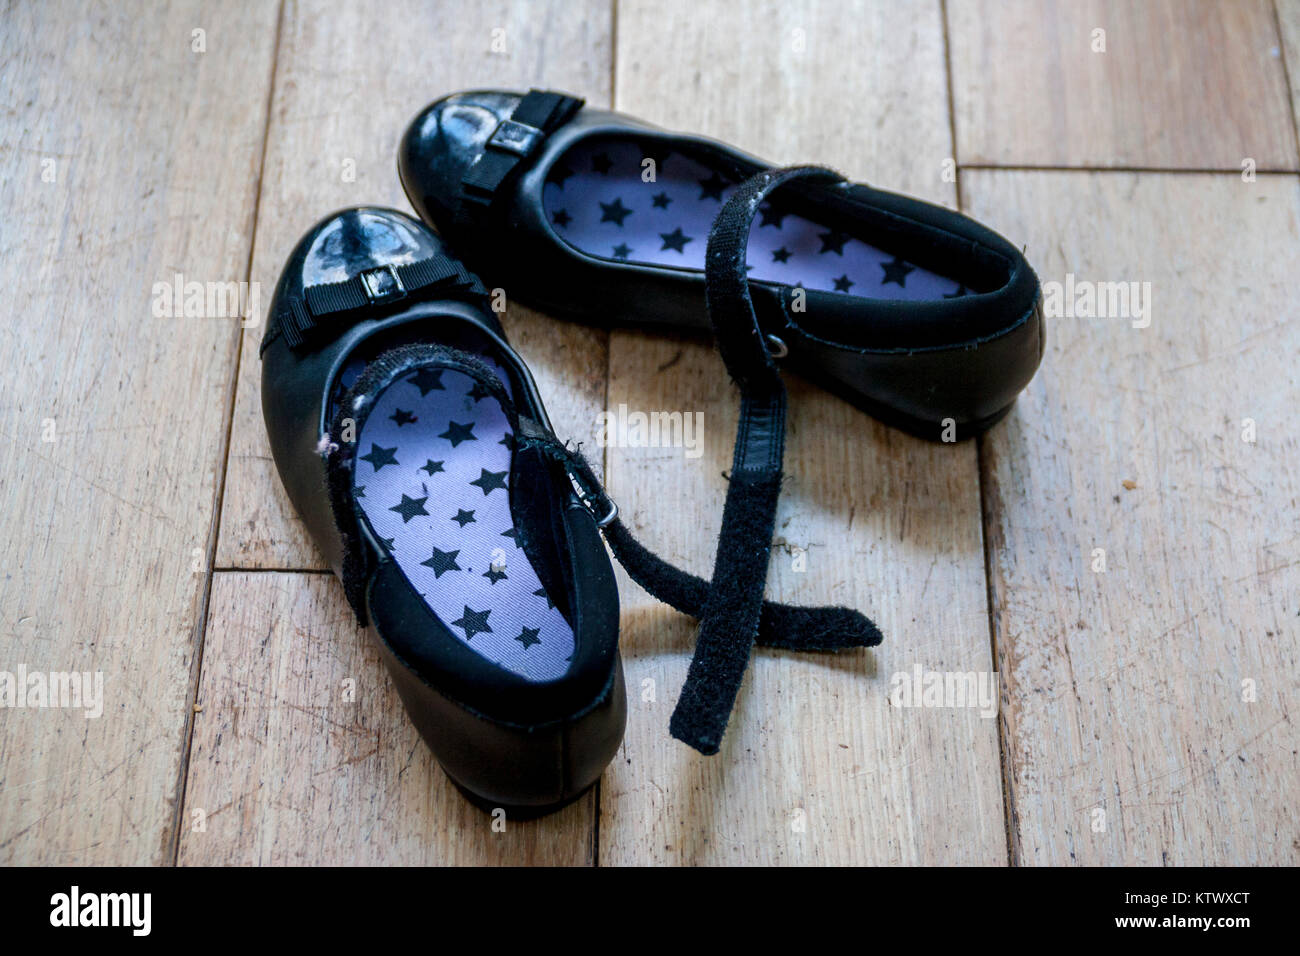 clarks childrens black shoes